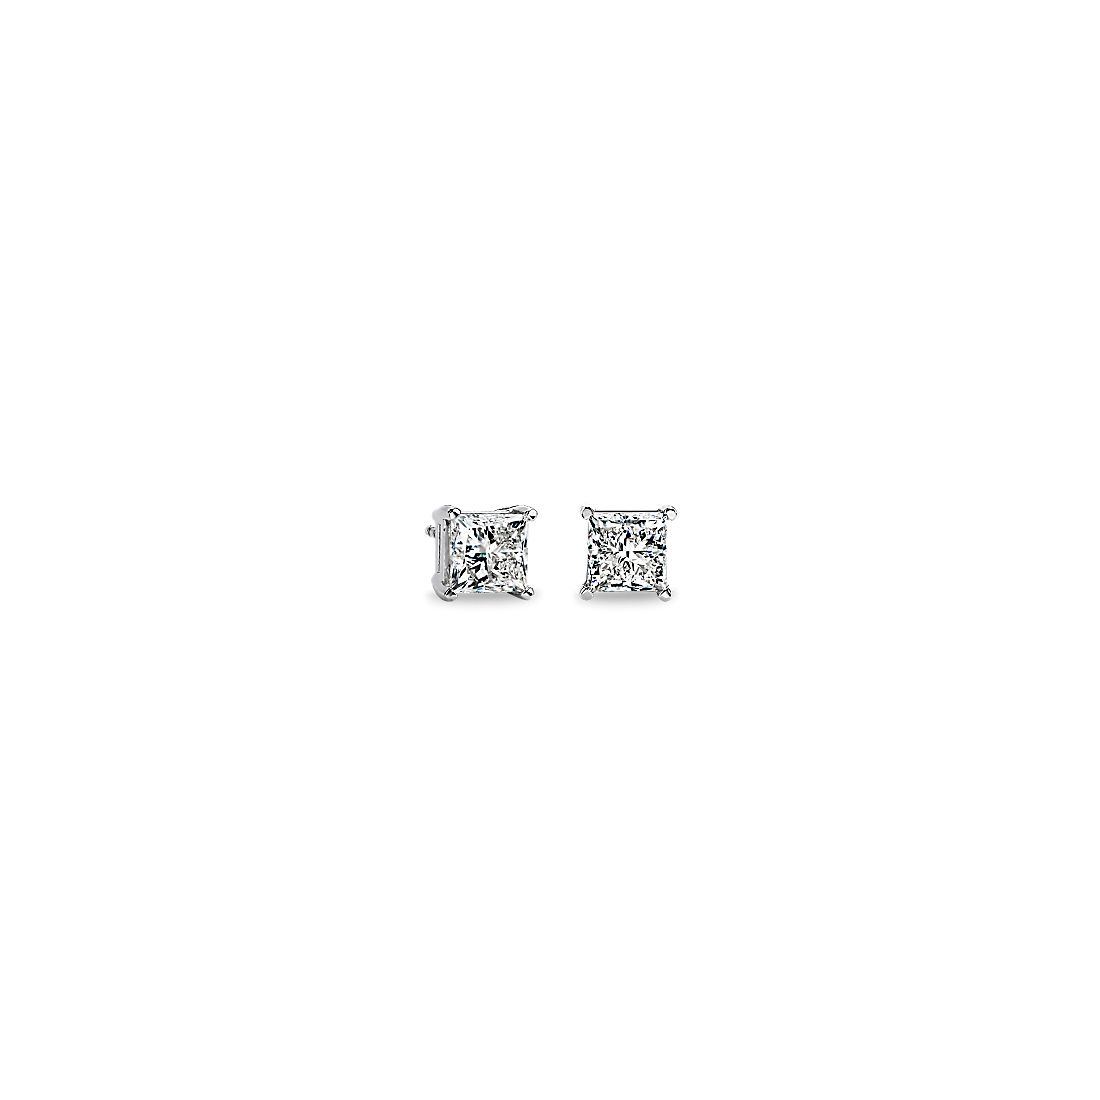 Princess-Cut Diamond Earrings in 14k White Gold (3 ct. tw.)